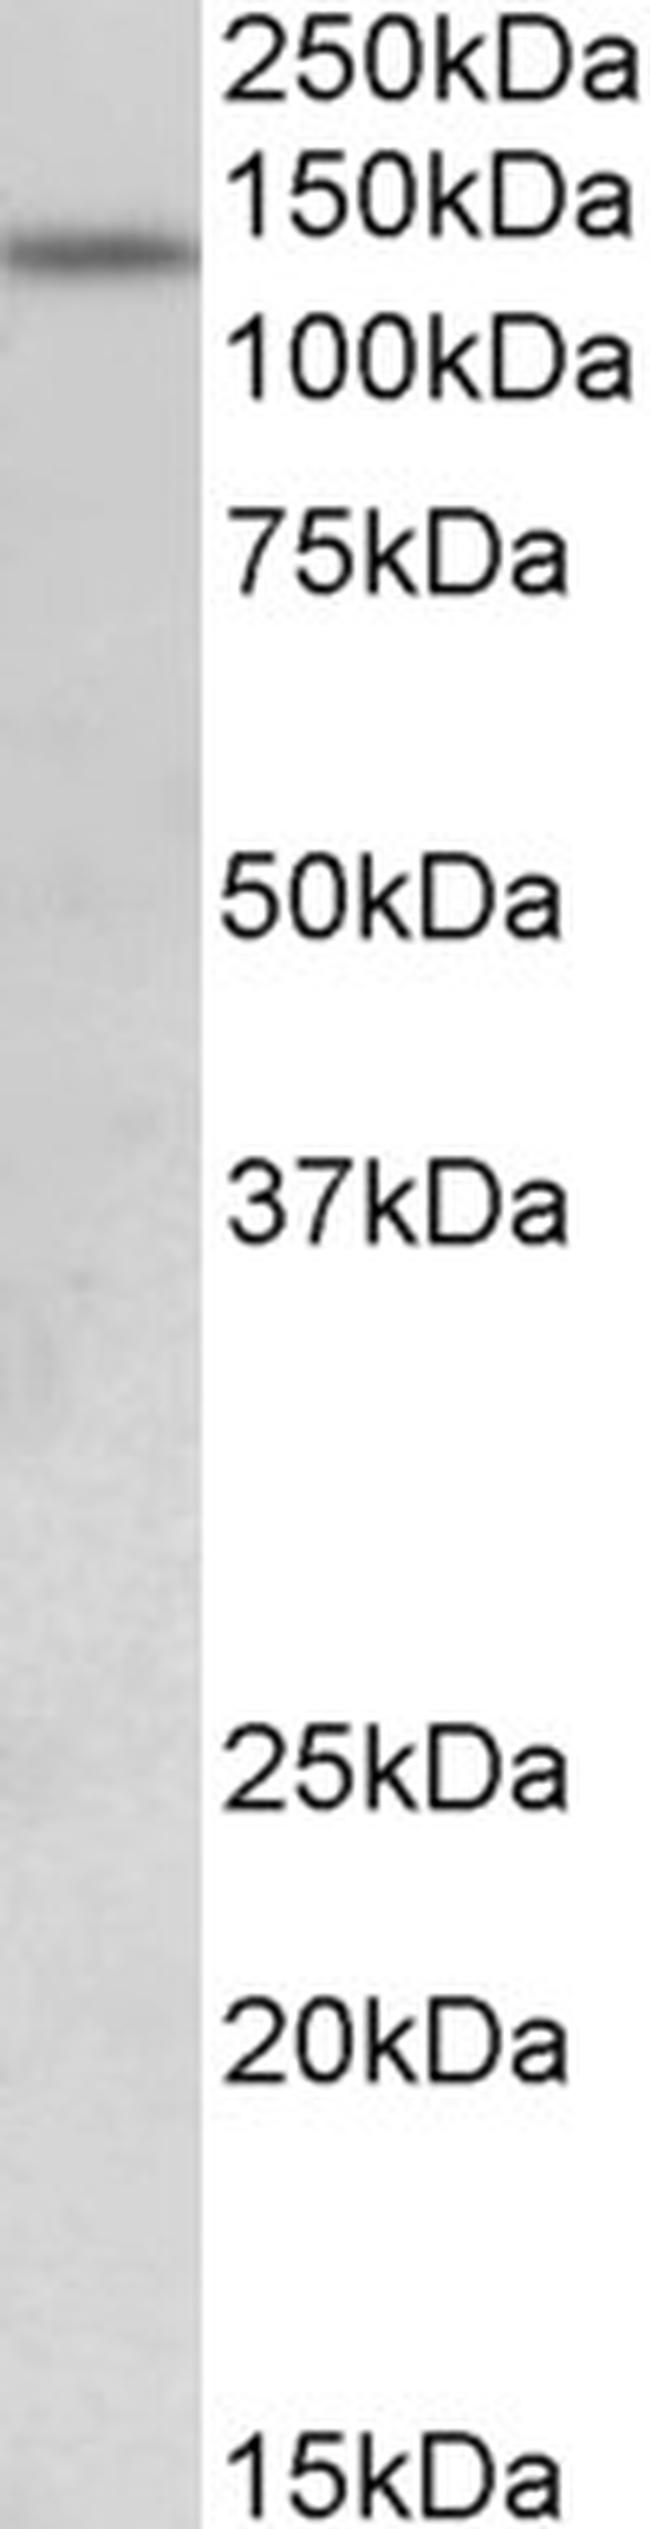 KDM2A Antibody in Western Blot (WB)